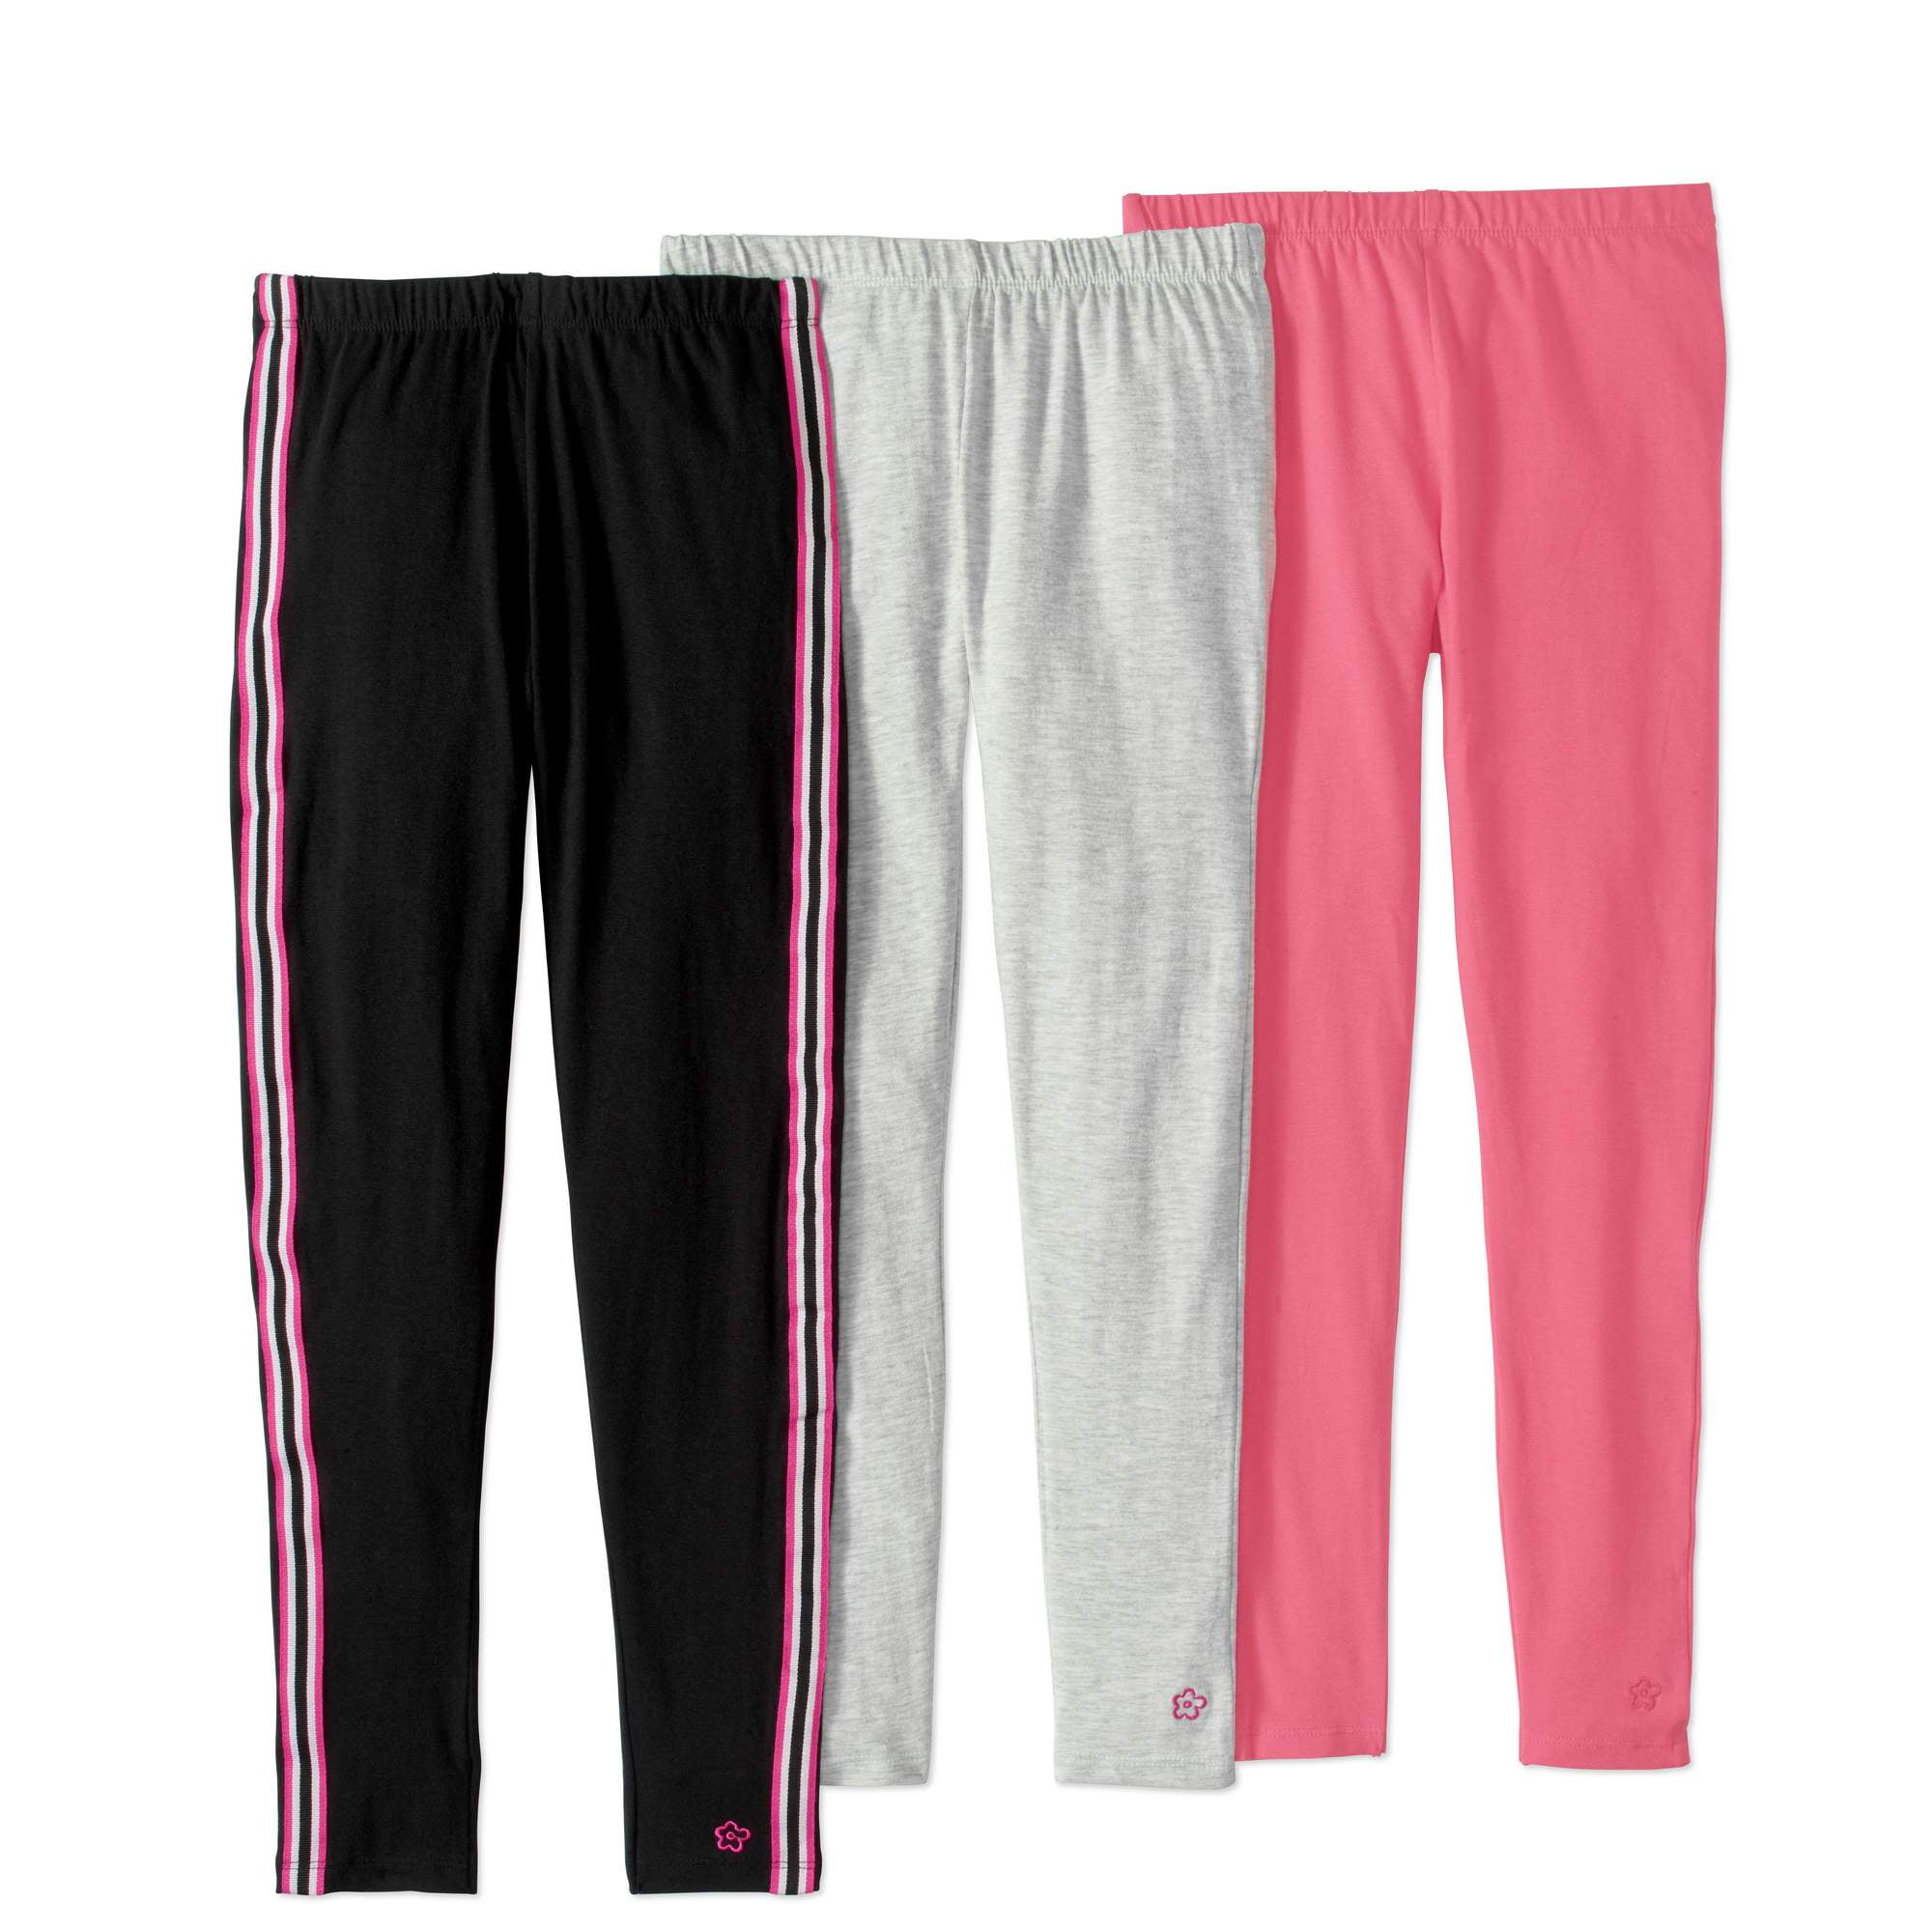 Girls' Knit Leggings 3-Pack Set - Walmart.com